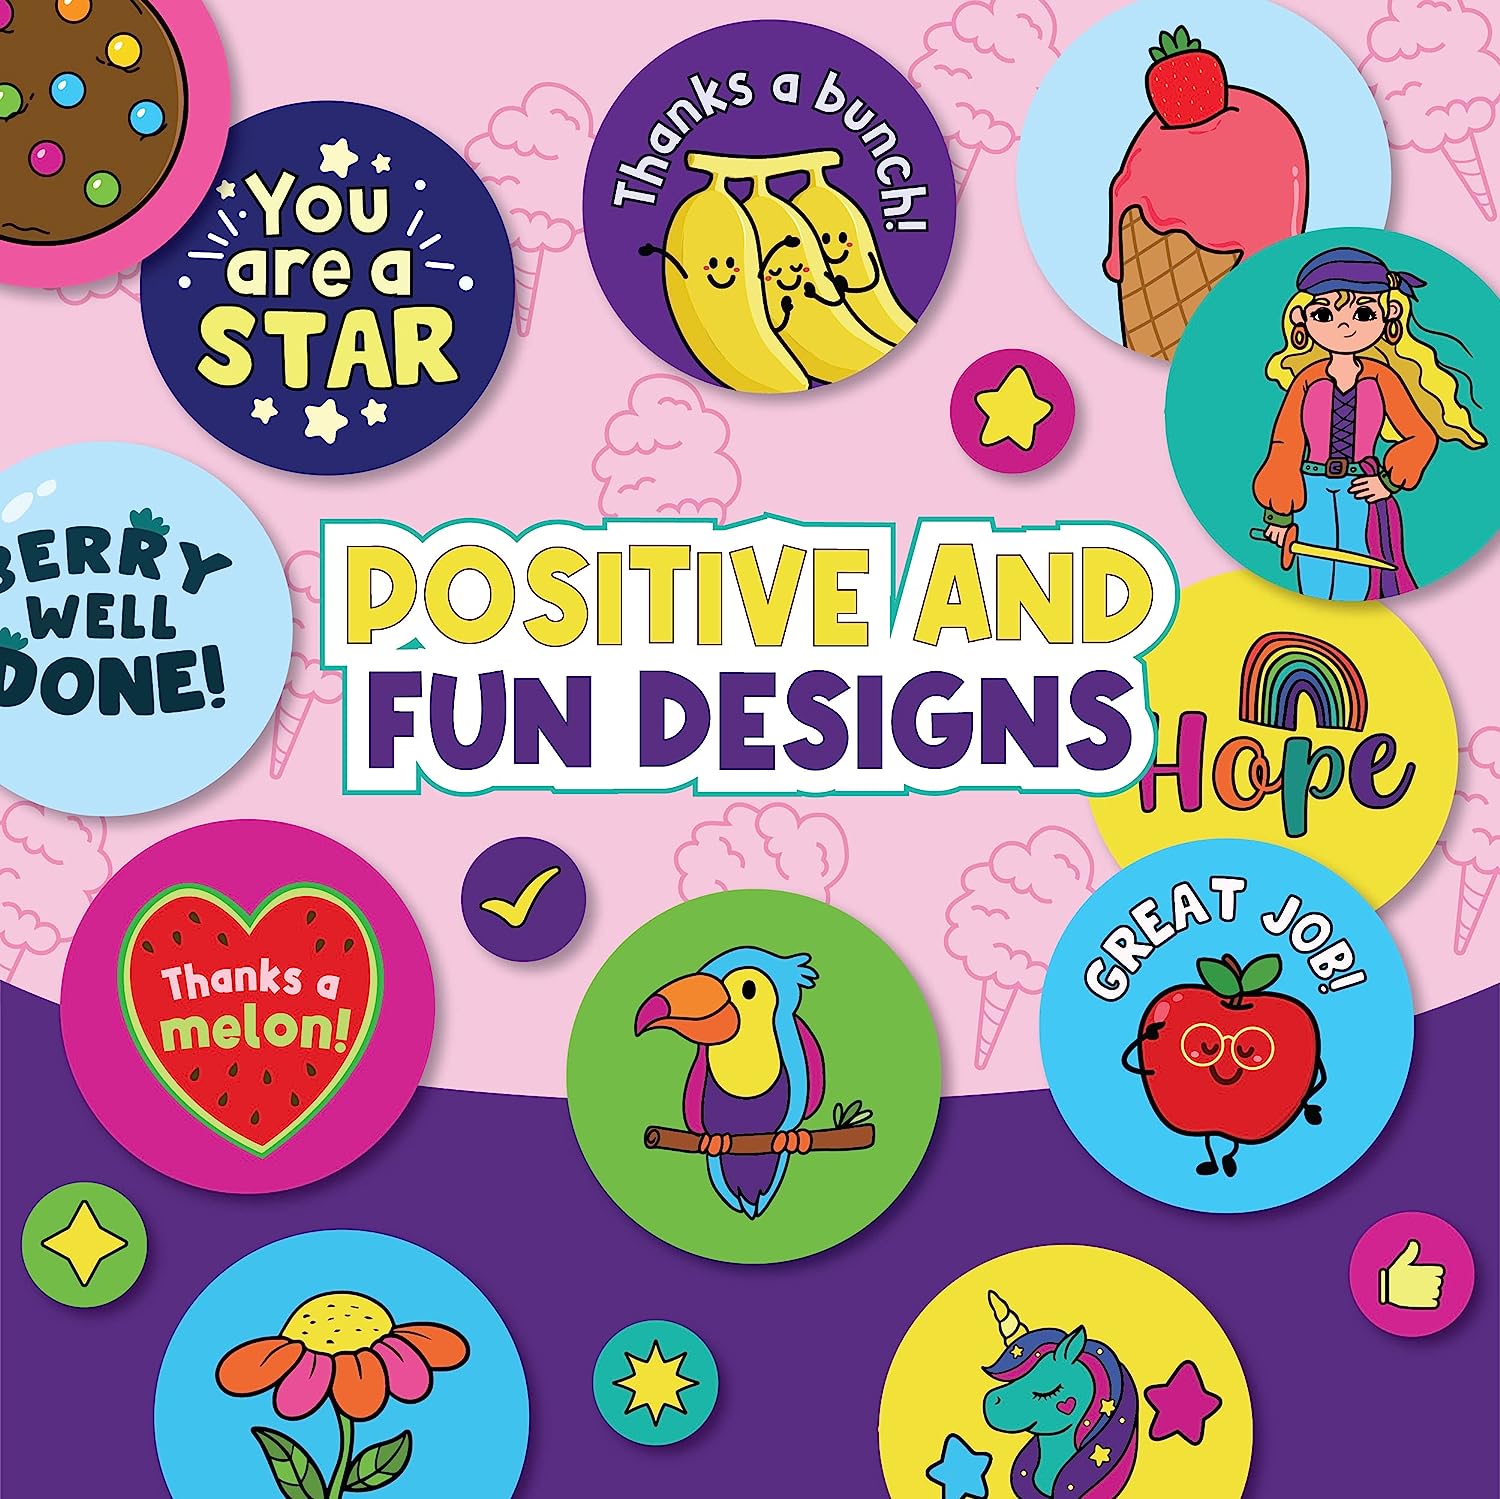 Teacher Stickers for Kids Mega Pack by Purple Ladybug Novelty, 4960 Reward Stickers & Incentive Stickers for Teachers Classroom & School Bulk